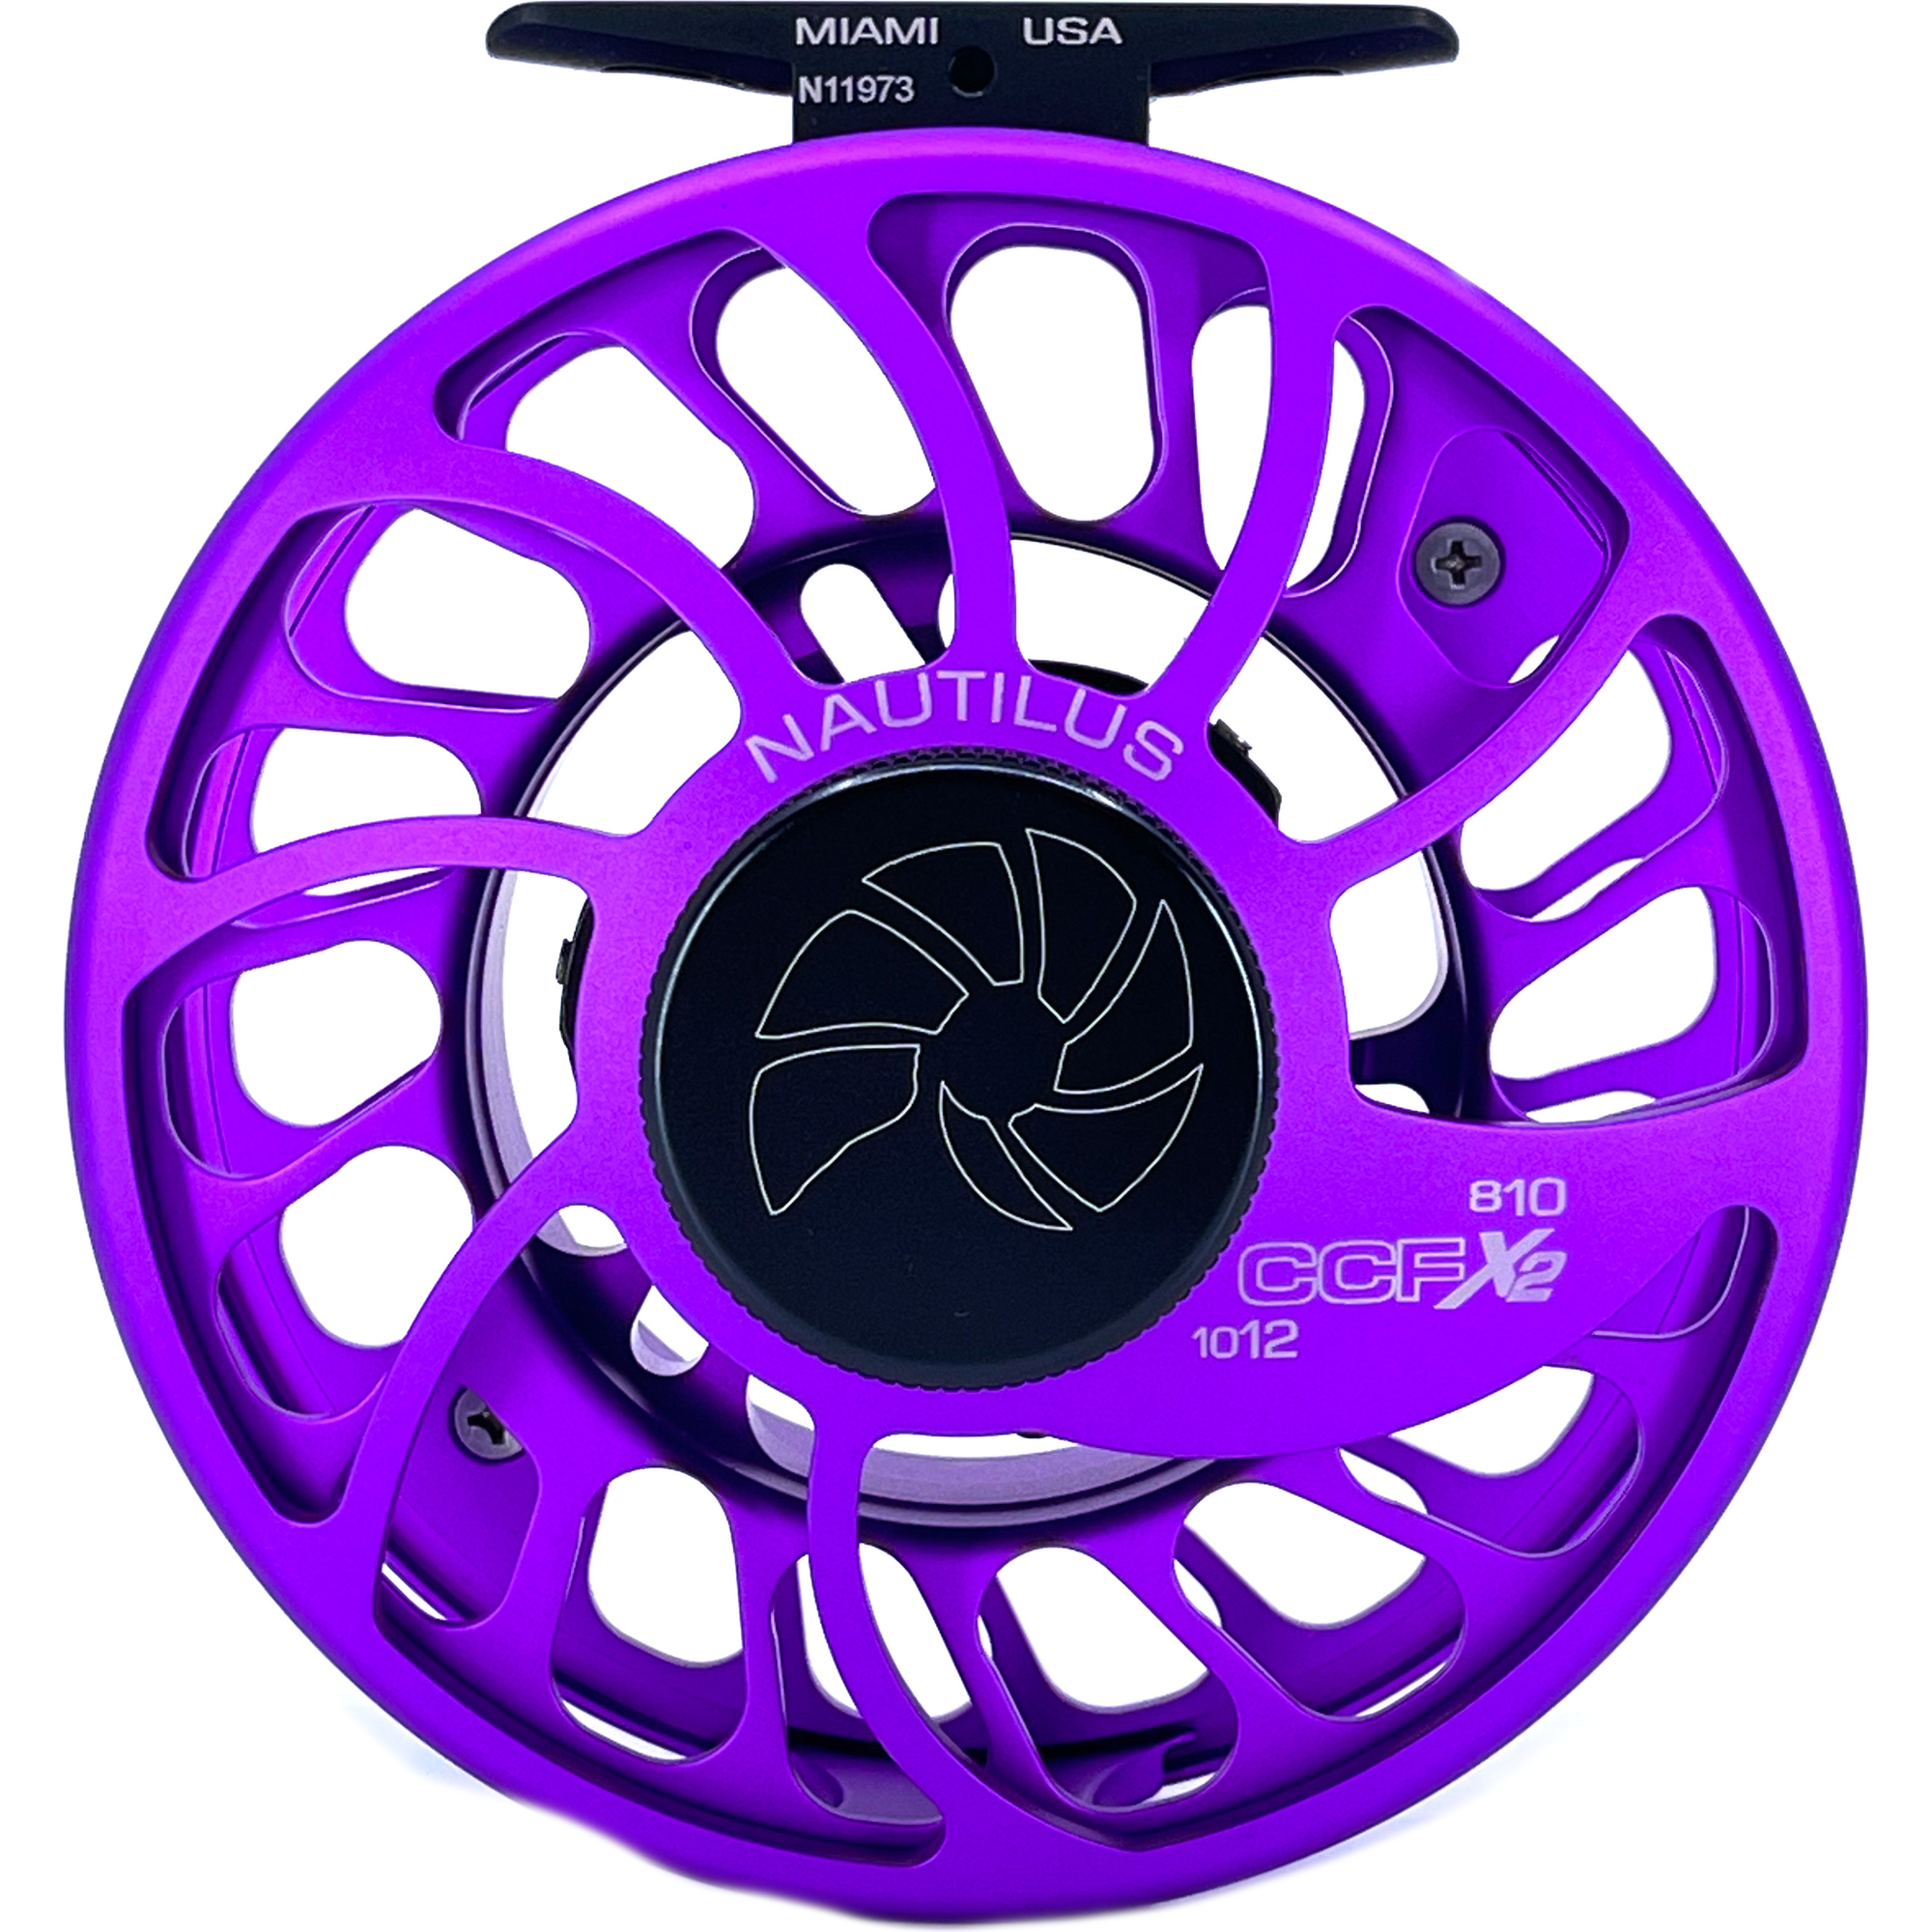 Nautilus - CCF X2 - 8/10 - Purple Haze (CUSTOM IN STOCK)